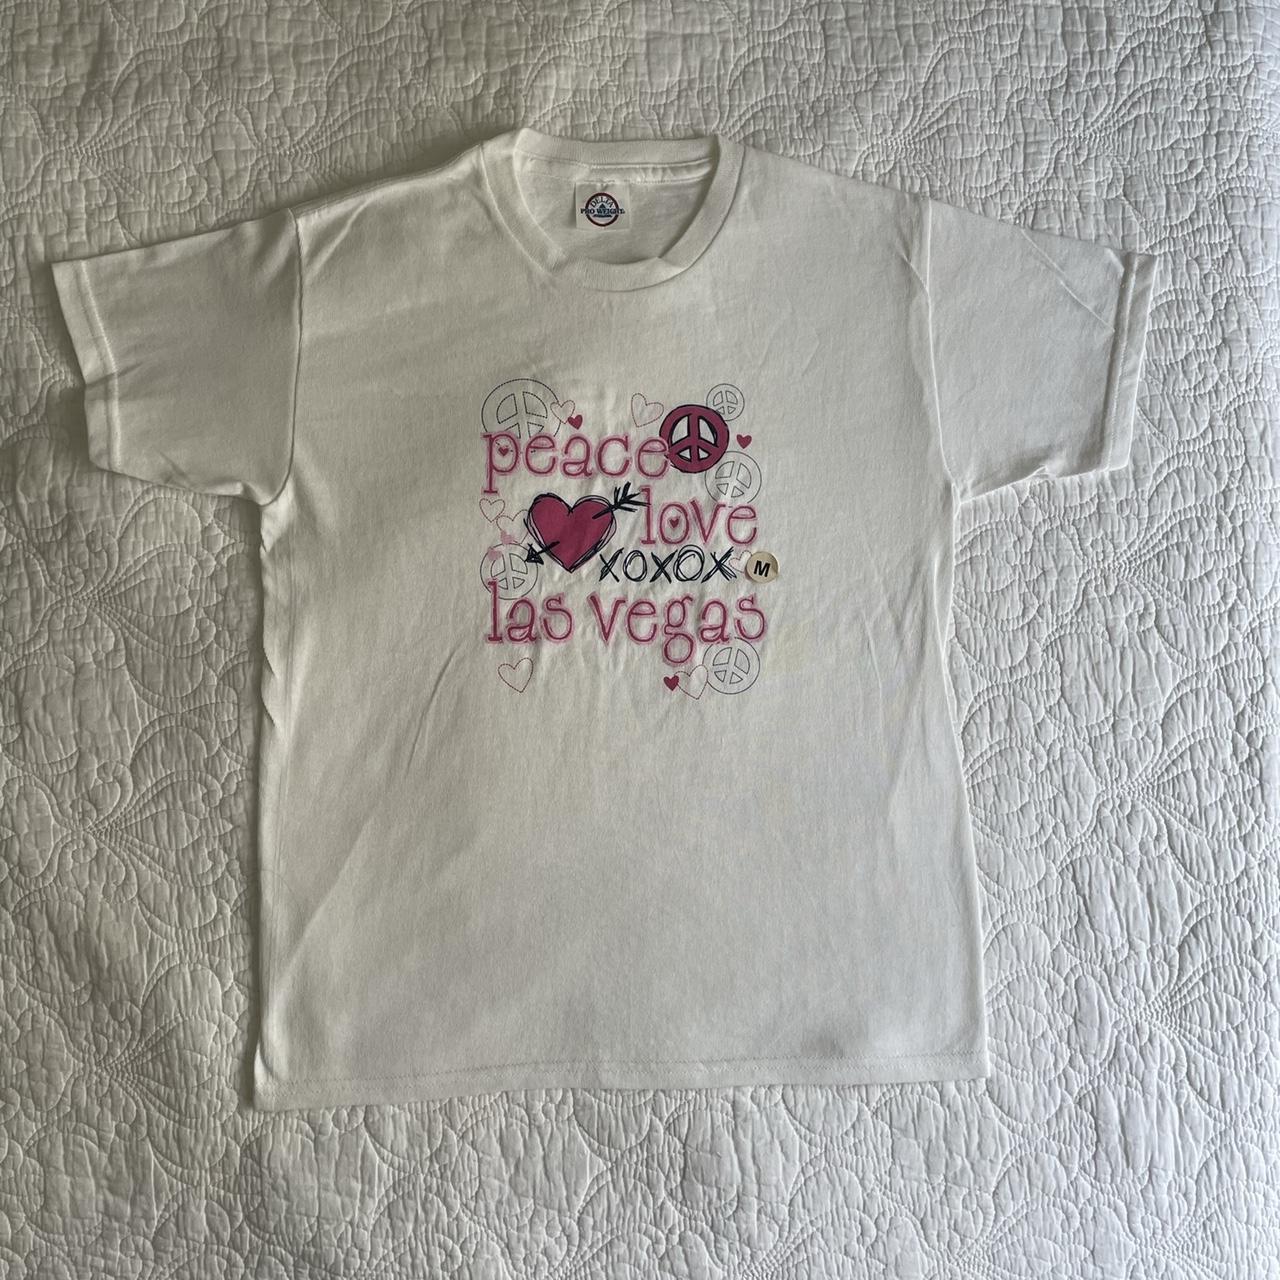 I heart las vegas' Women's T-Shirt